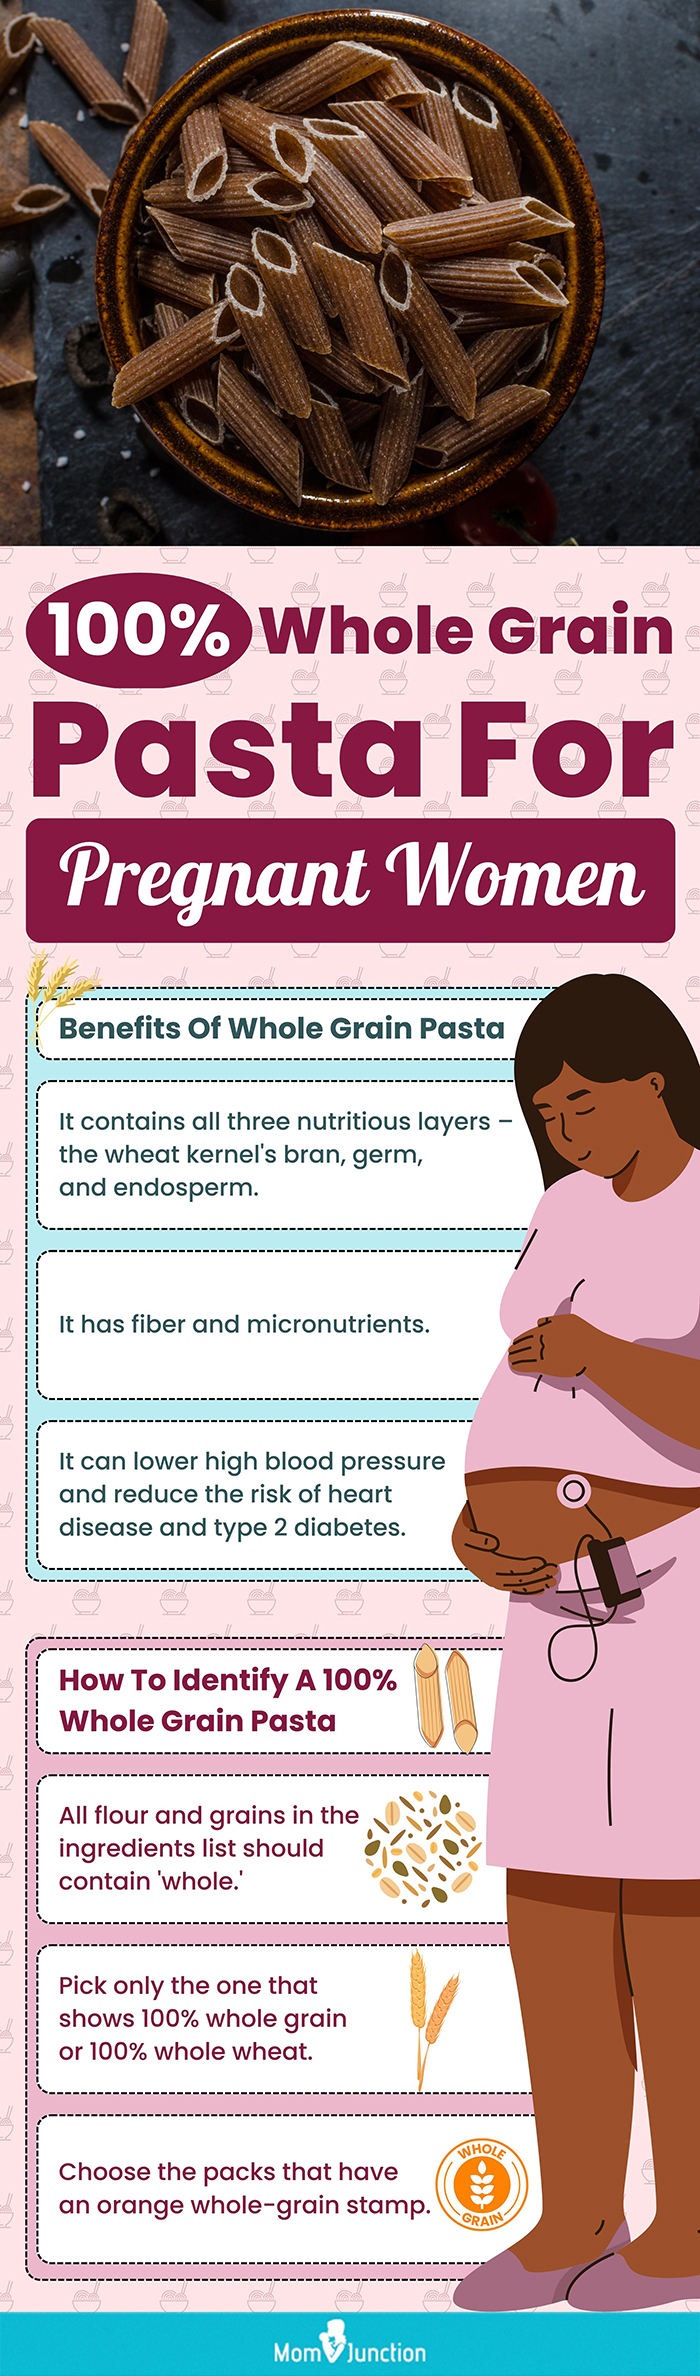 100% whole grain pasta for pregnant women (infographic)